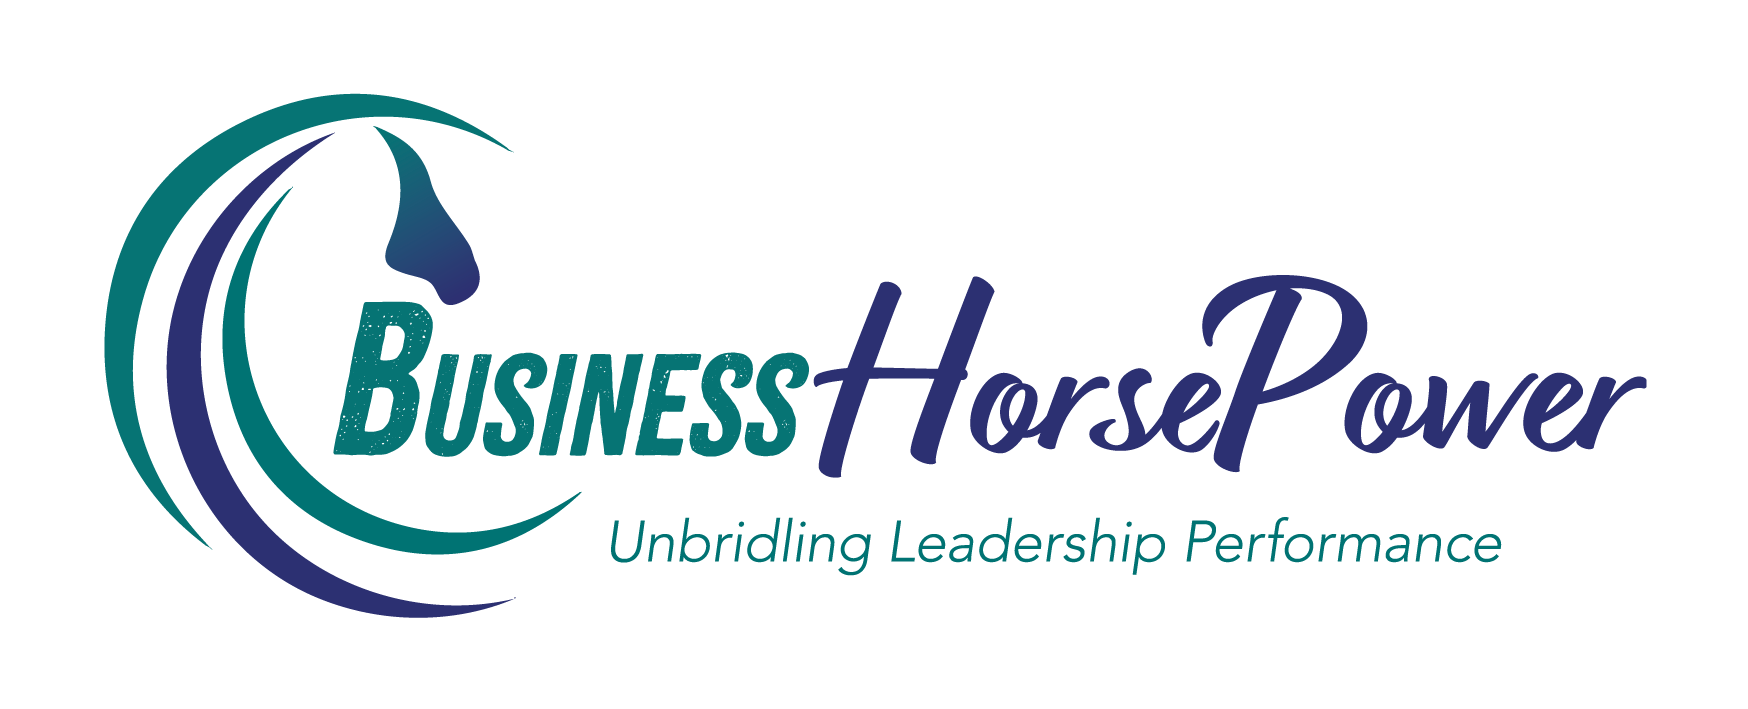 Business HorsePower